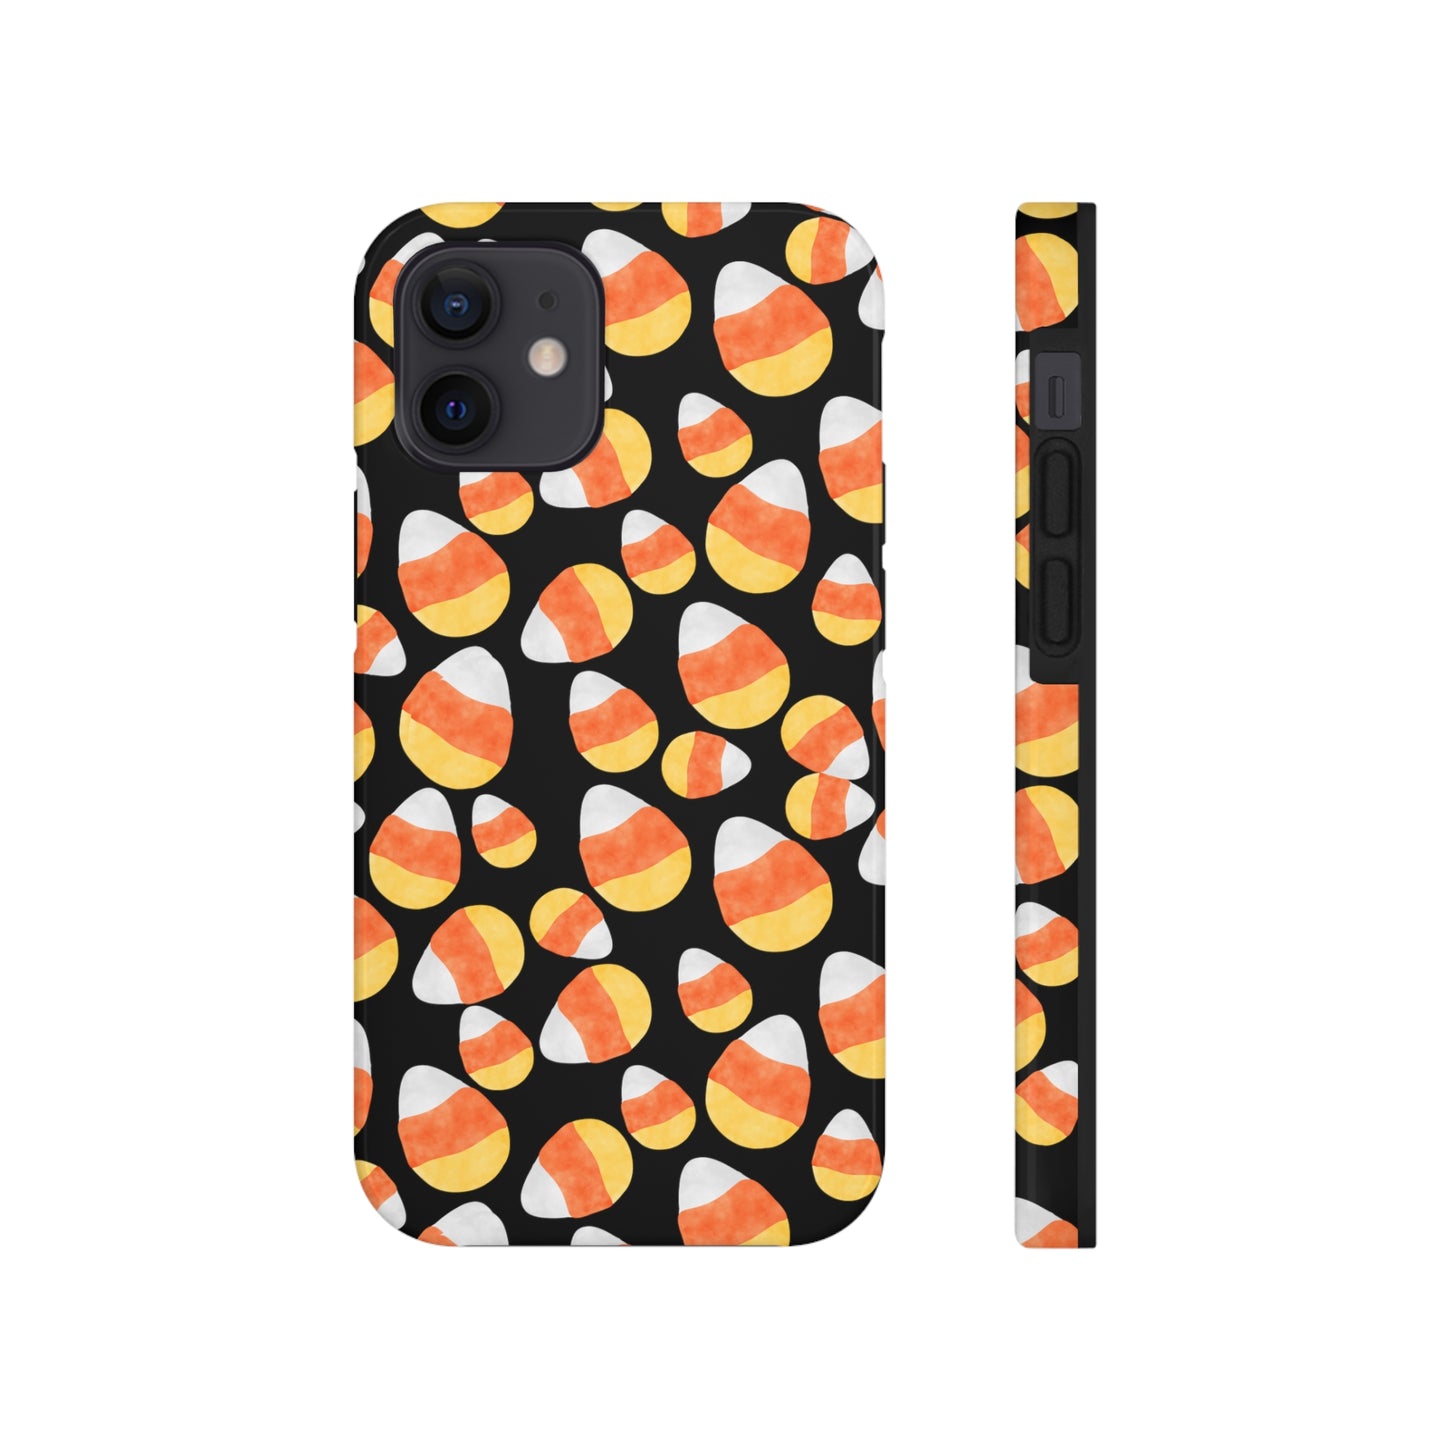 Halloween IPhone Case / Candy Corn Phone Case